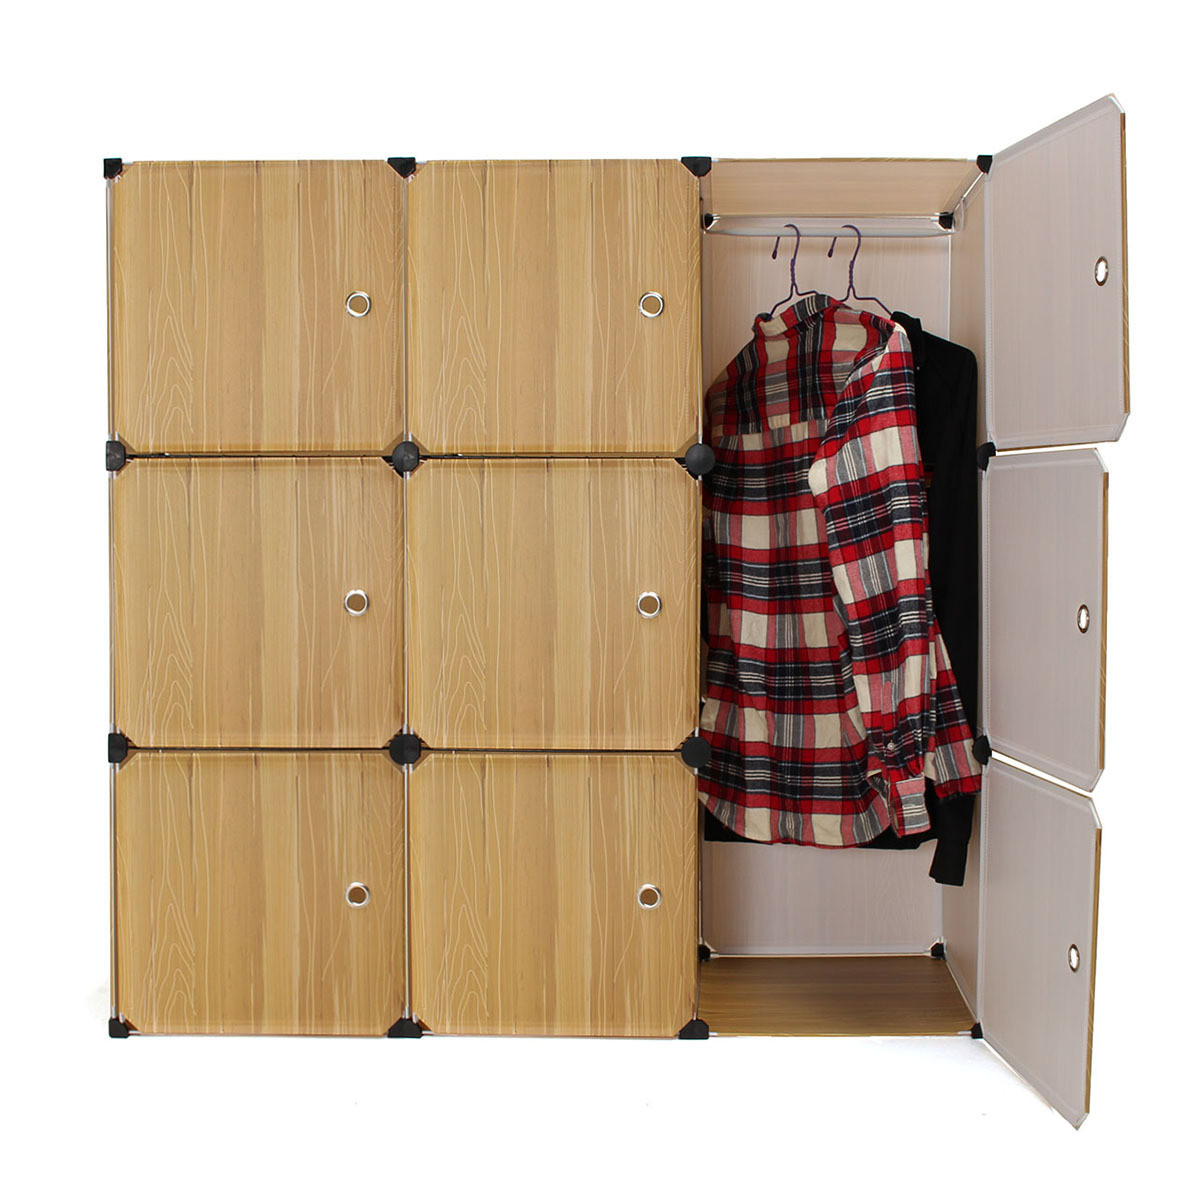 Best ideas about DIY Clothes Organizer
. Save or Pin DIY Portable Closet Storage Organizer Clothes Wardrobe Now.